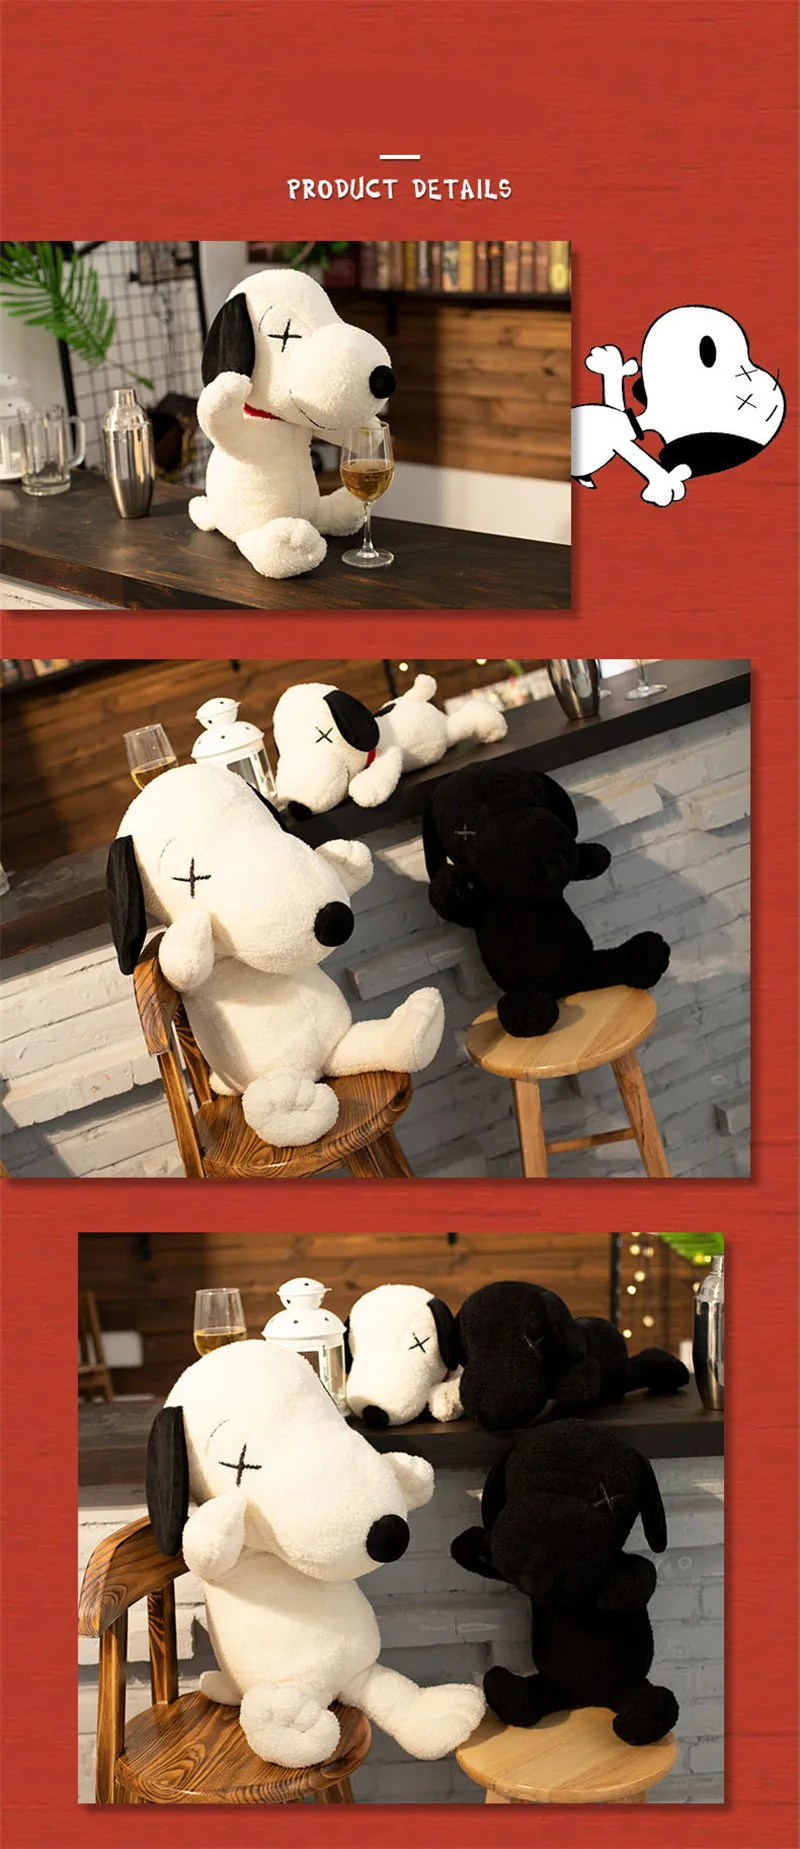  New Snoopy Plush Pillow Stitch Anime Plush Plush Toys Nightmare Before Christmas Girl Toys for Kids Movie & Tv 3